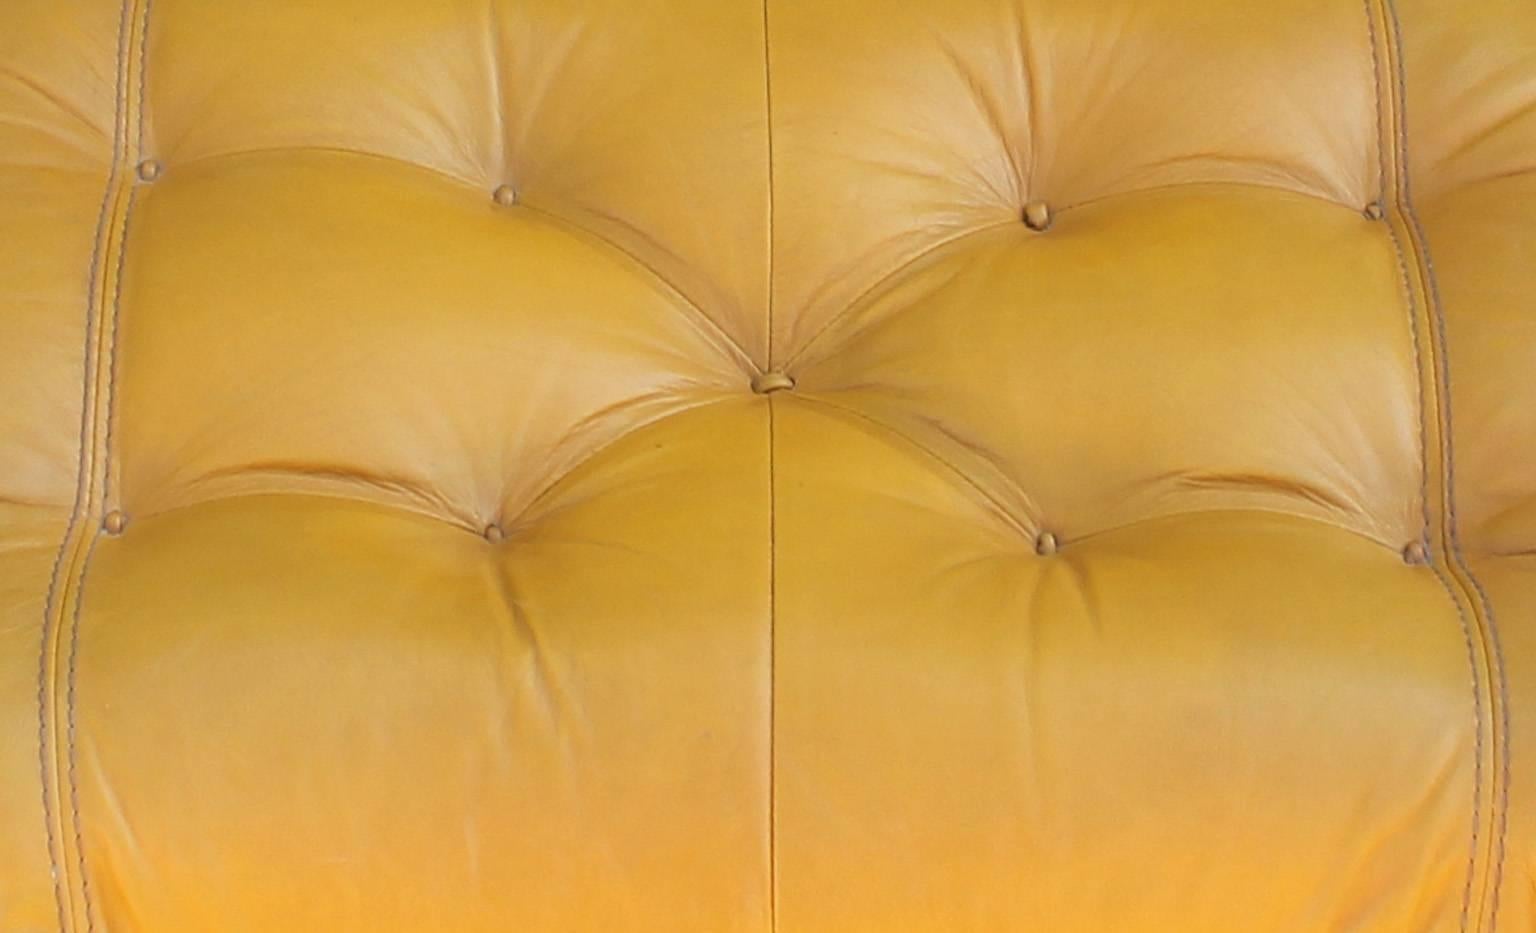 Modern Percival Lafer Brazilian Mustard Yellow Lounge Chair with Ottoman